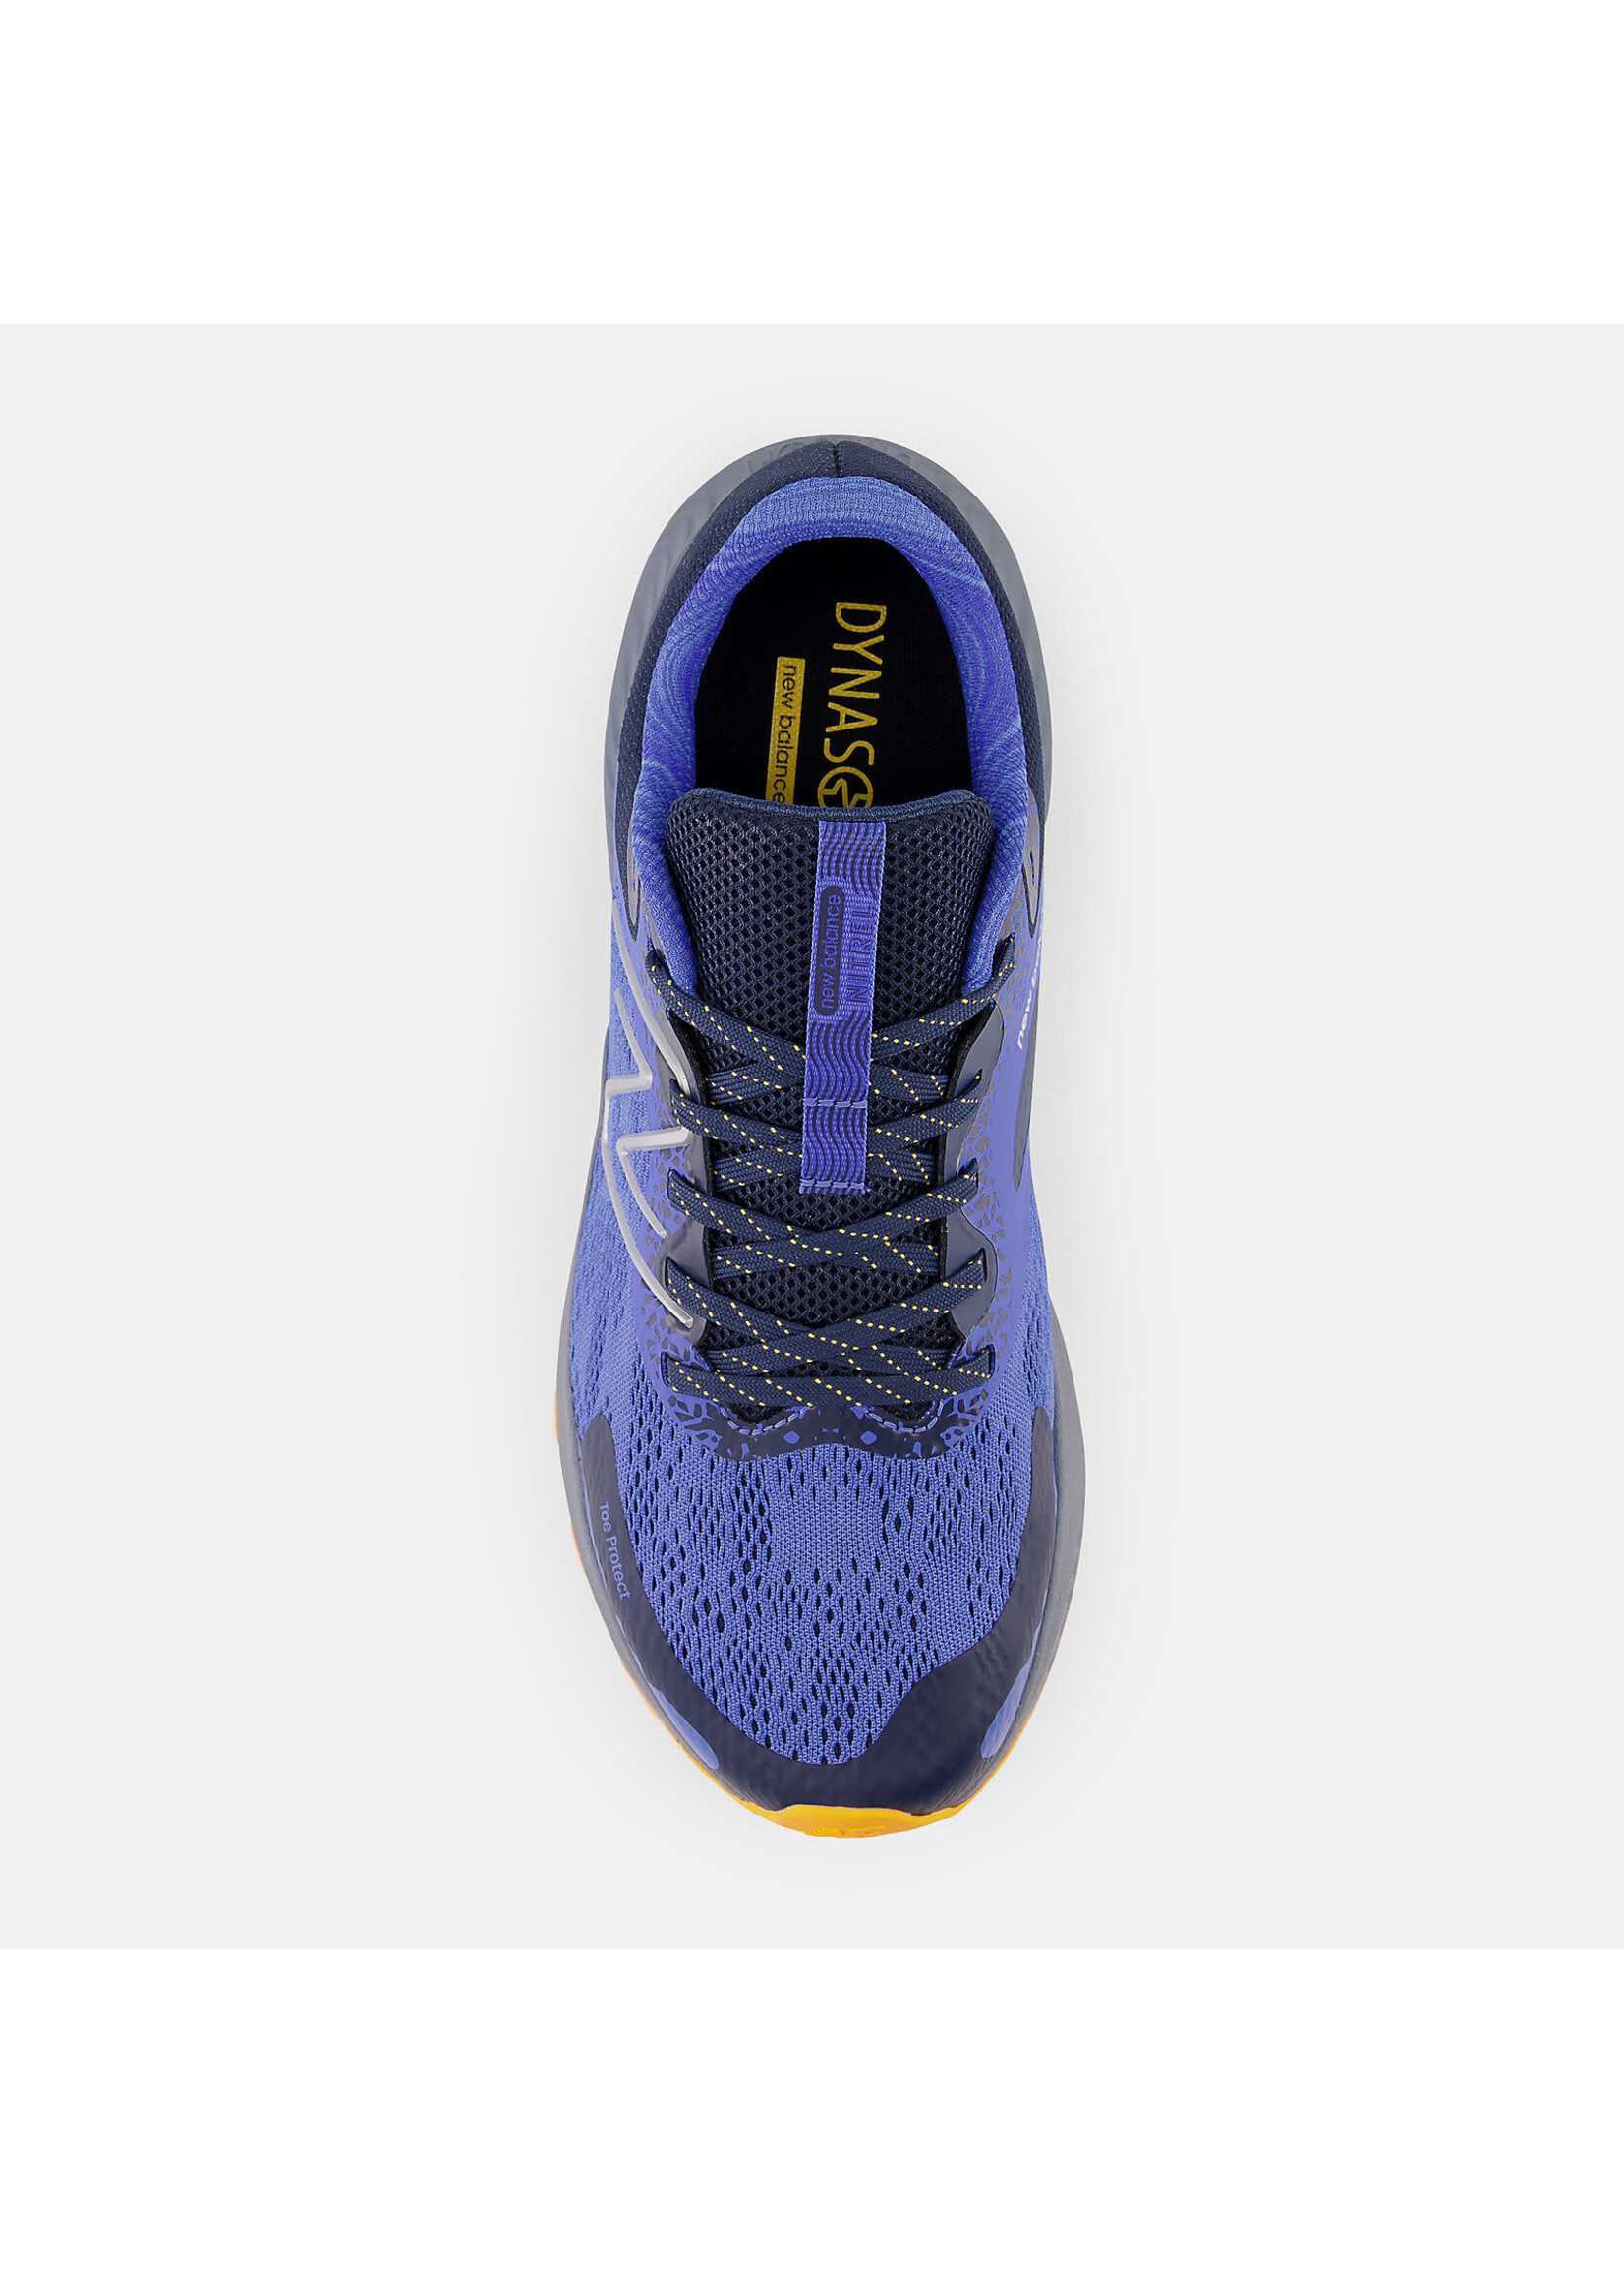 New Balance New Balance DynaSoft Nitrel V5 Mens Trail Running Shoe Blue